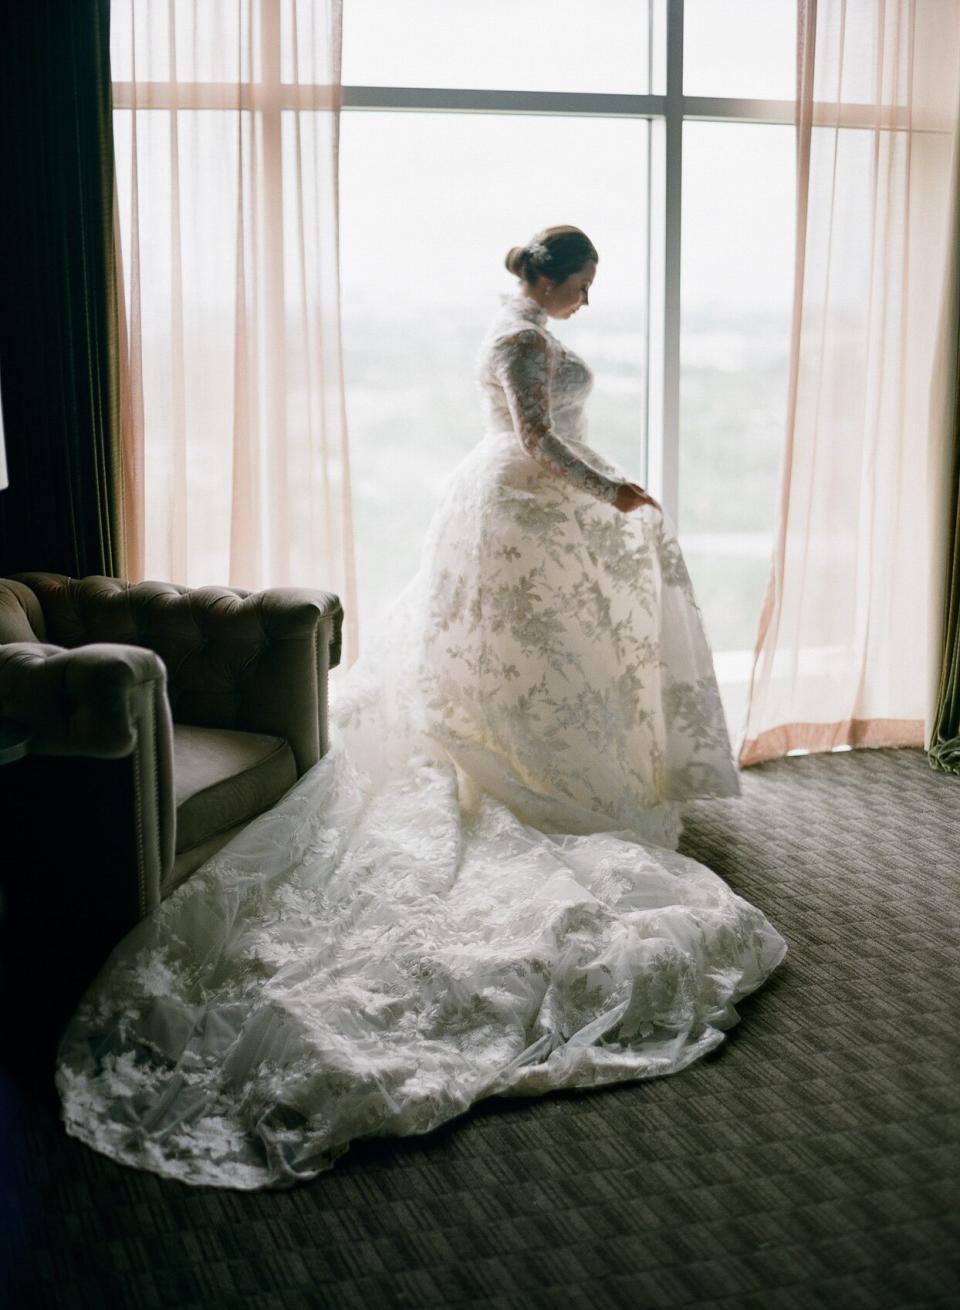 bride in flowing floral dress by window